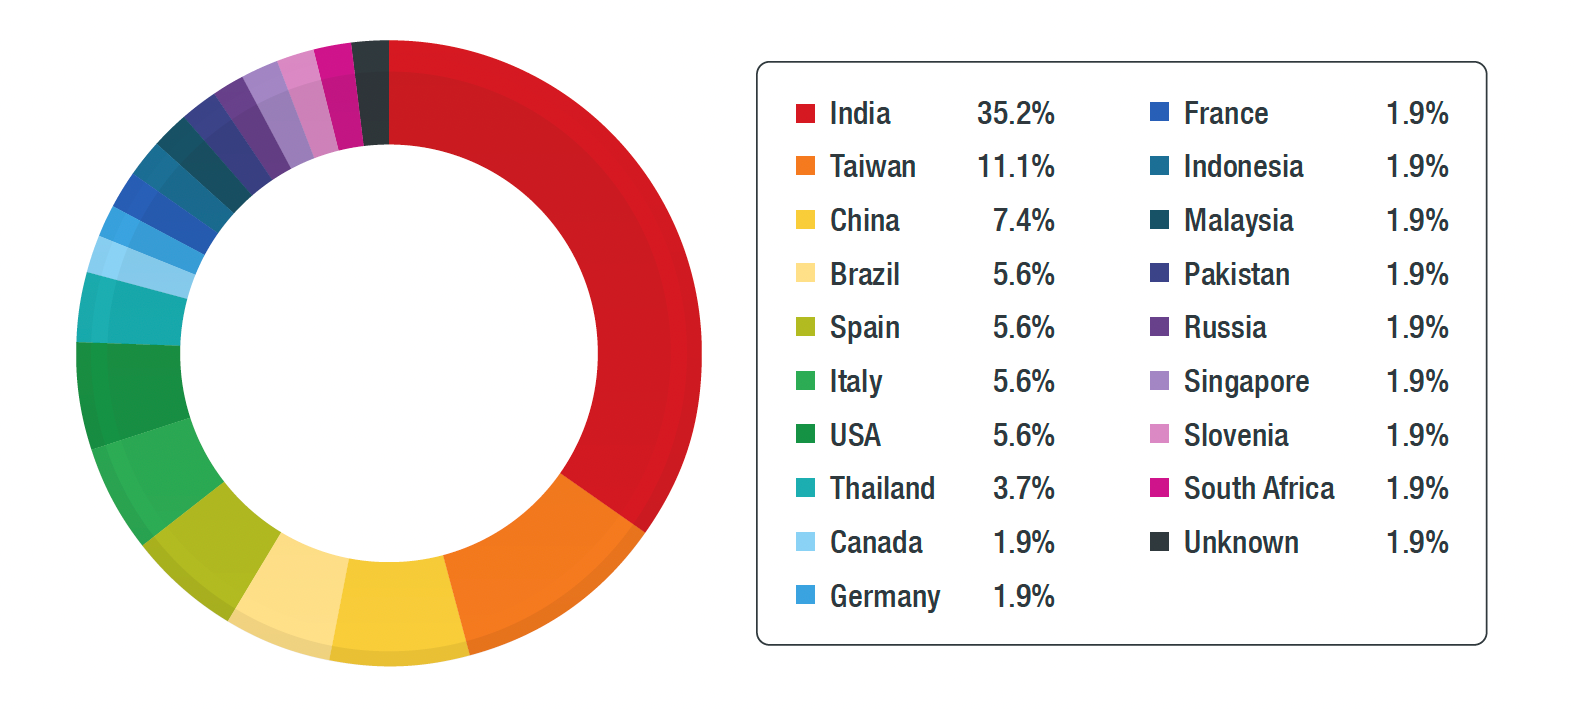 MALXMR distribution per country and organization